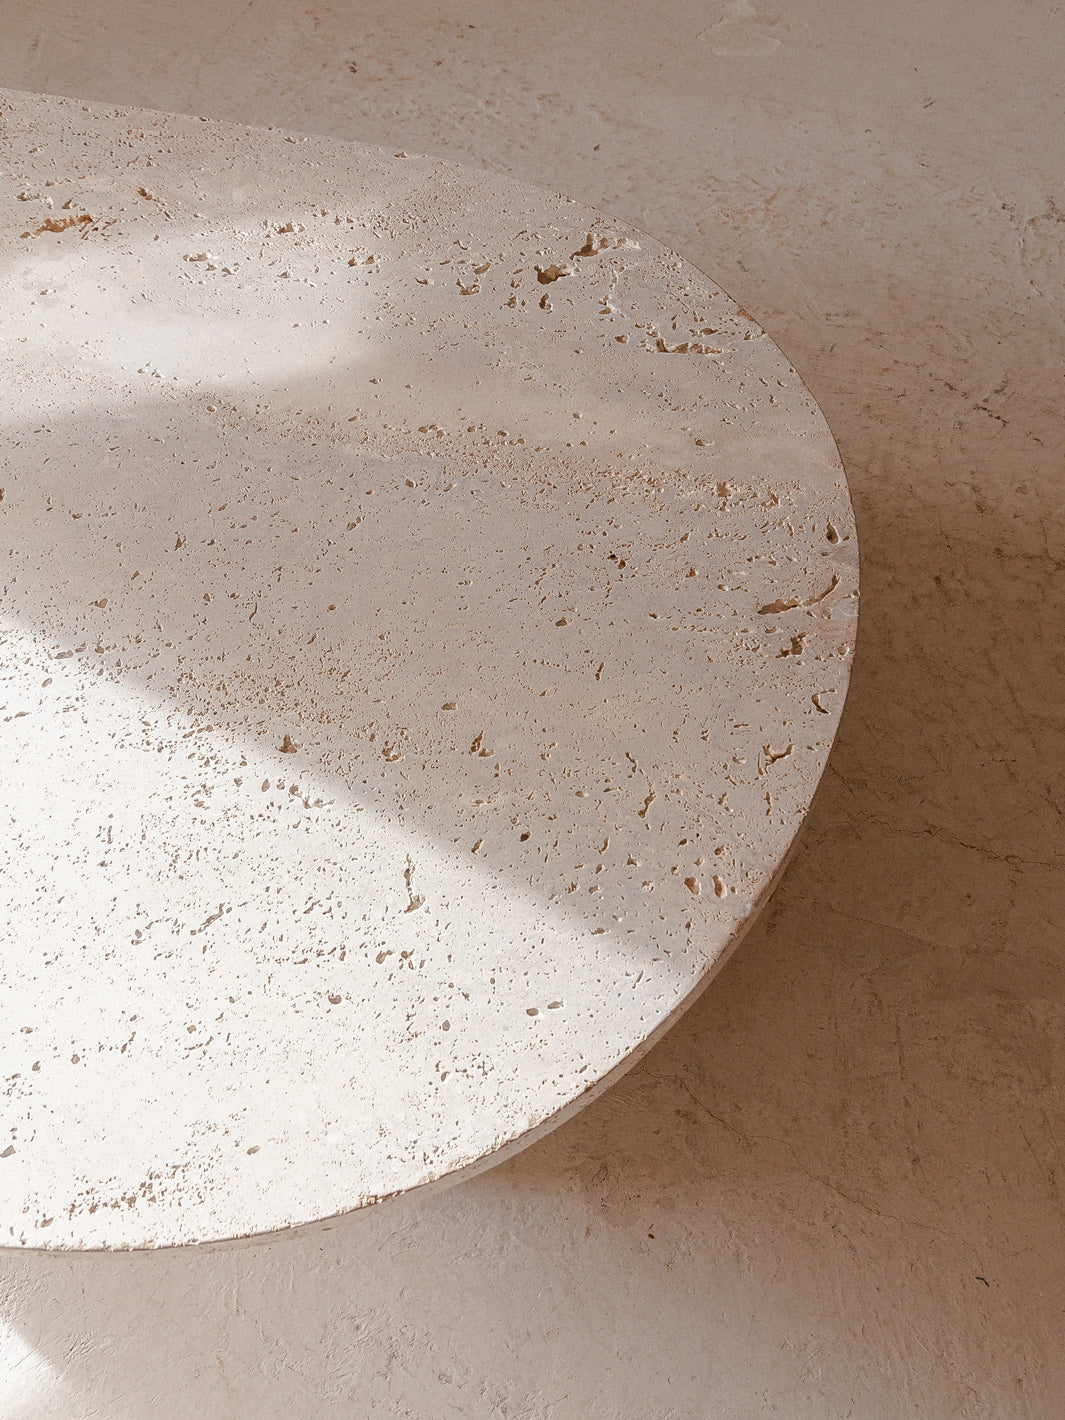 Table Amira marbre travertin organique 150x90cm